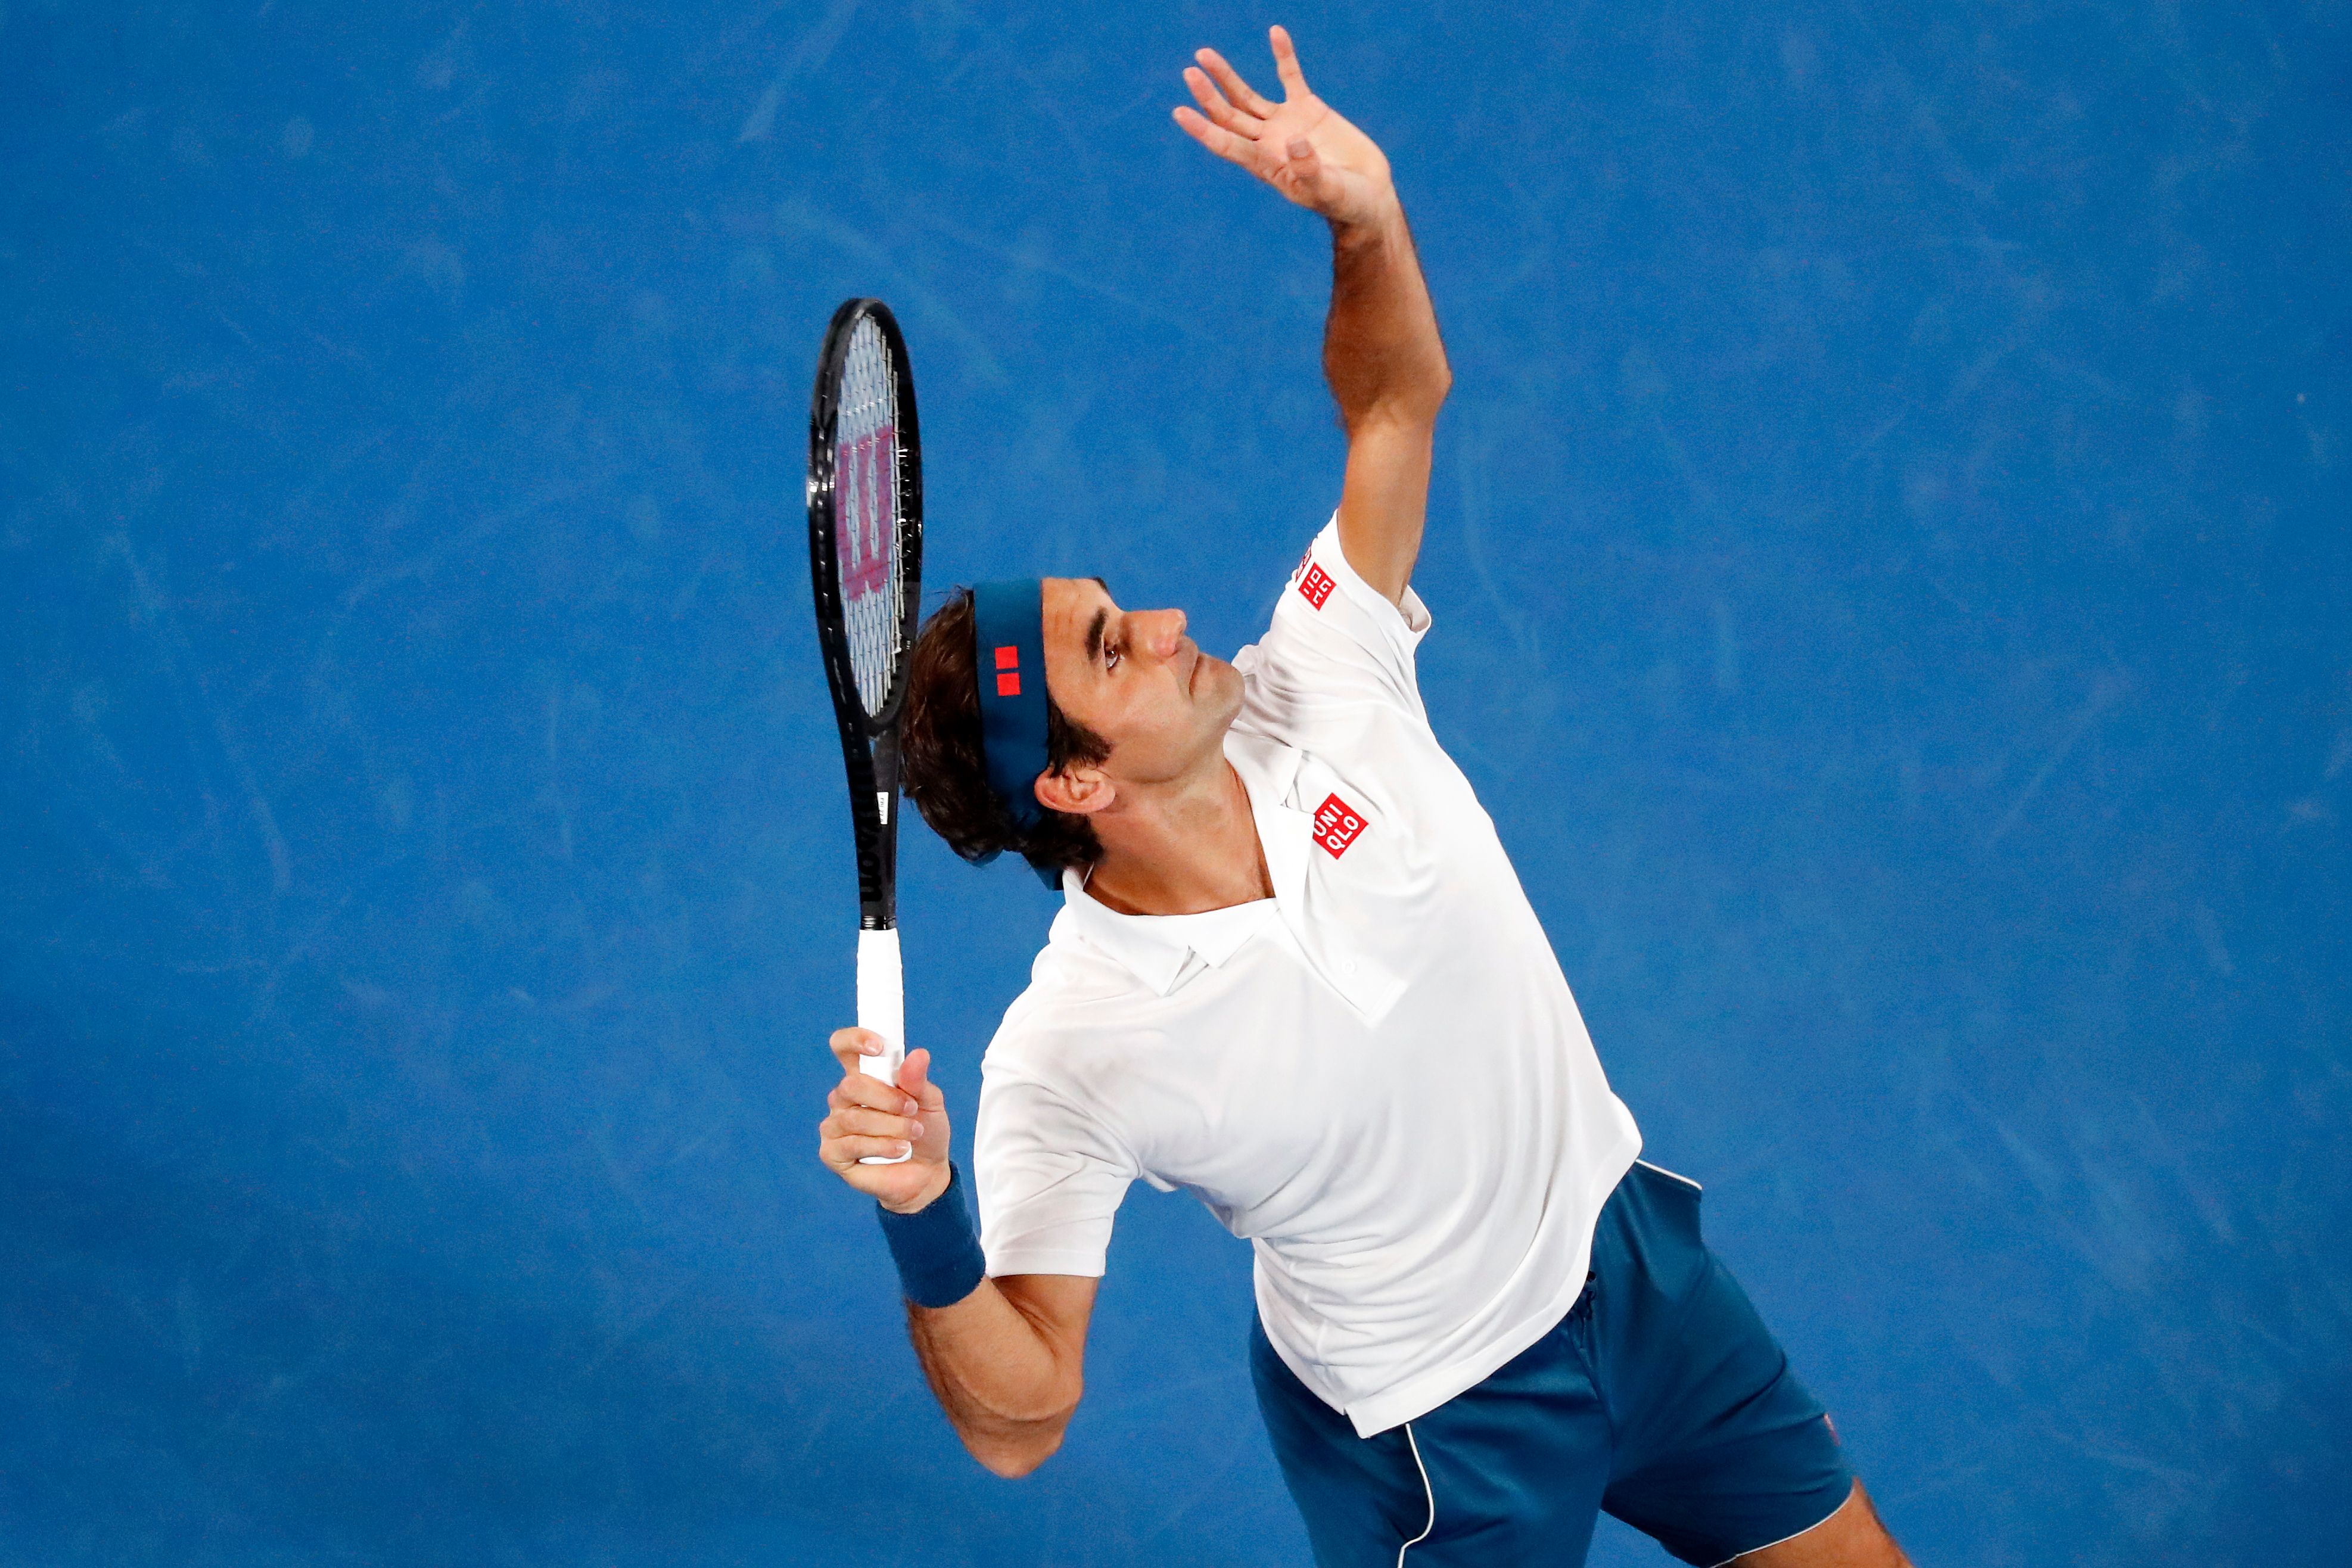 RandR Federer aims for 100th title in Dubai; Nadal returns in Acapulco